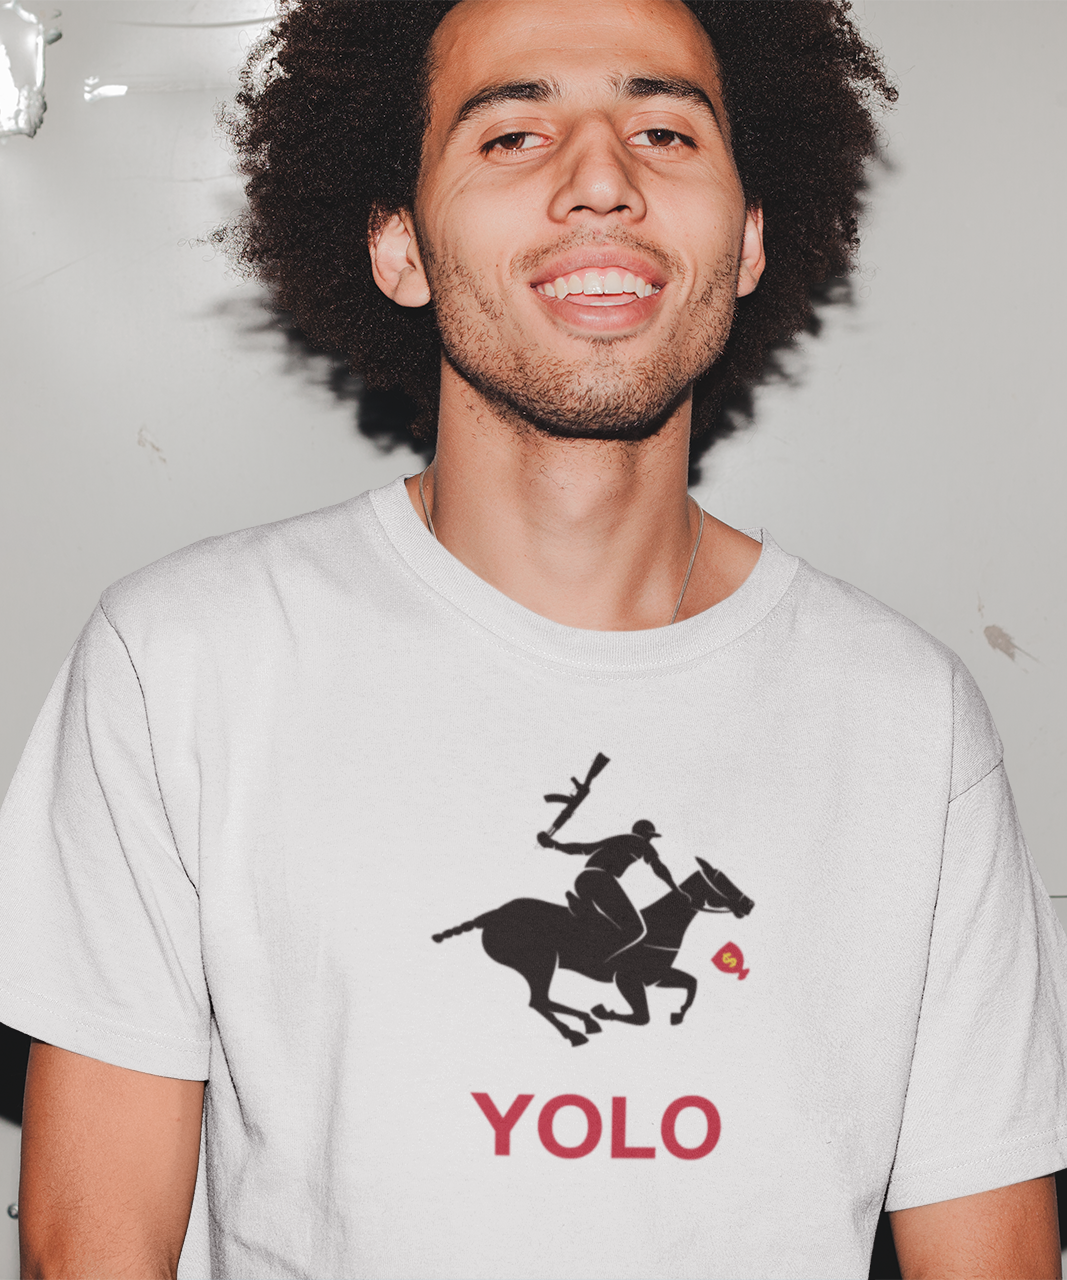 Yolo, Short Sleeve T-shirt